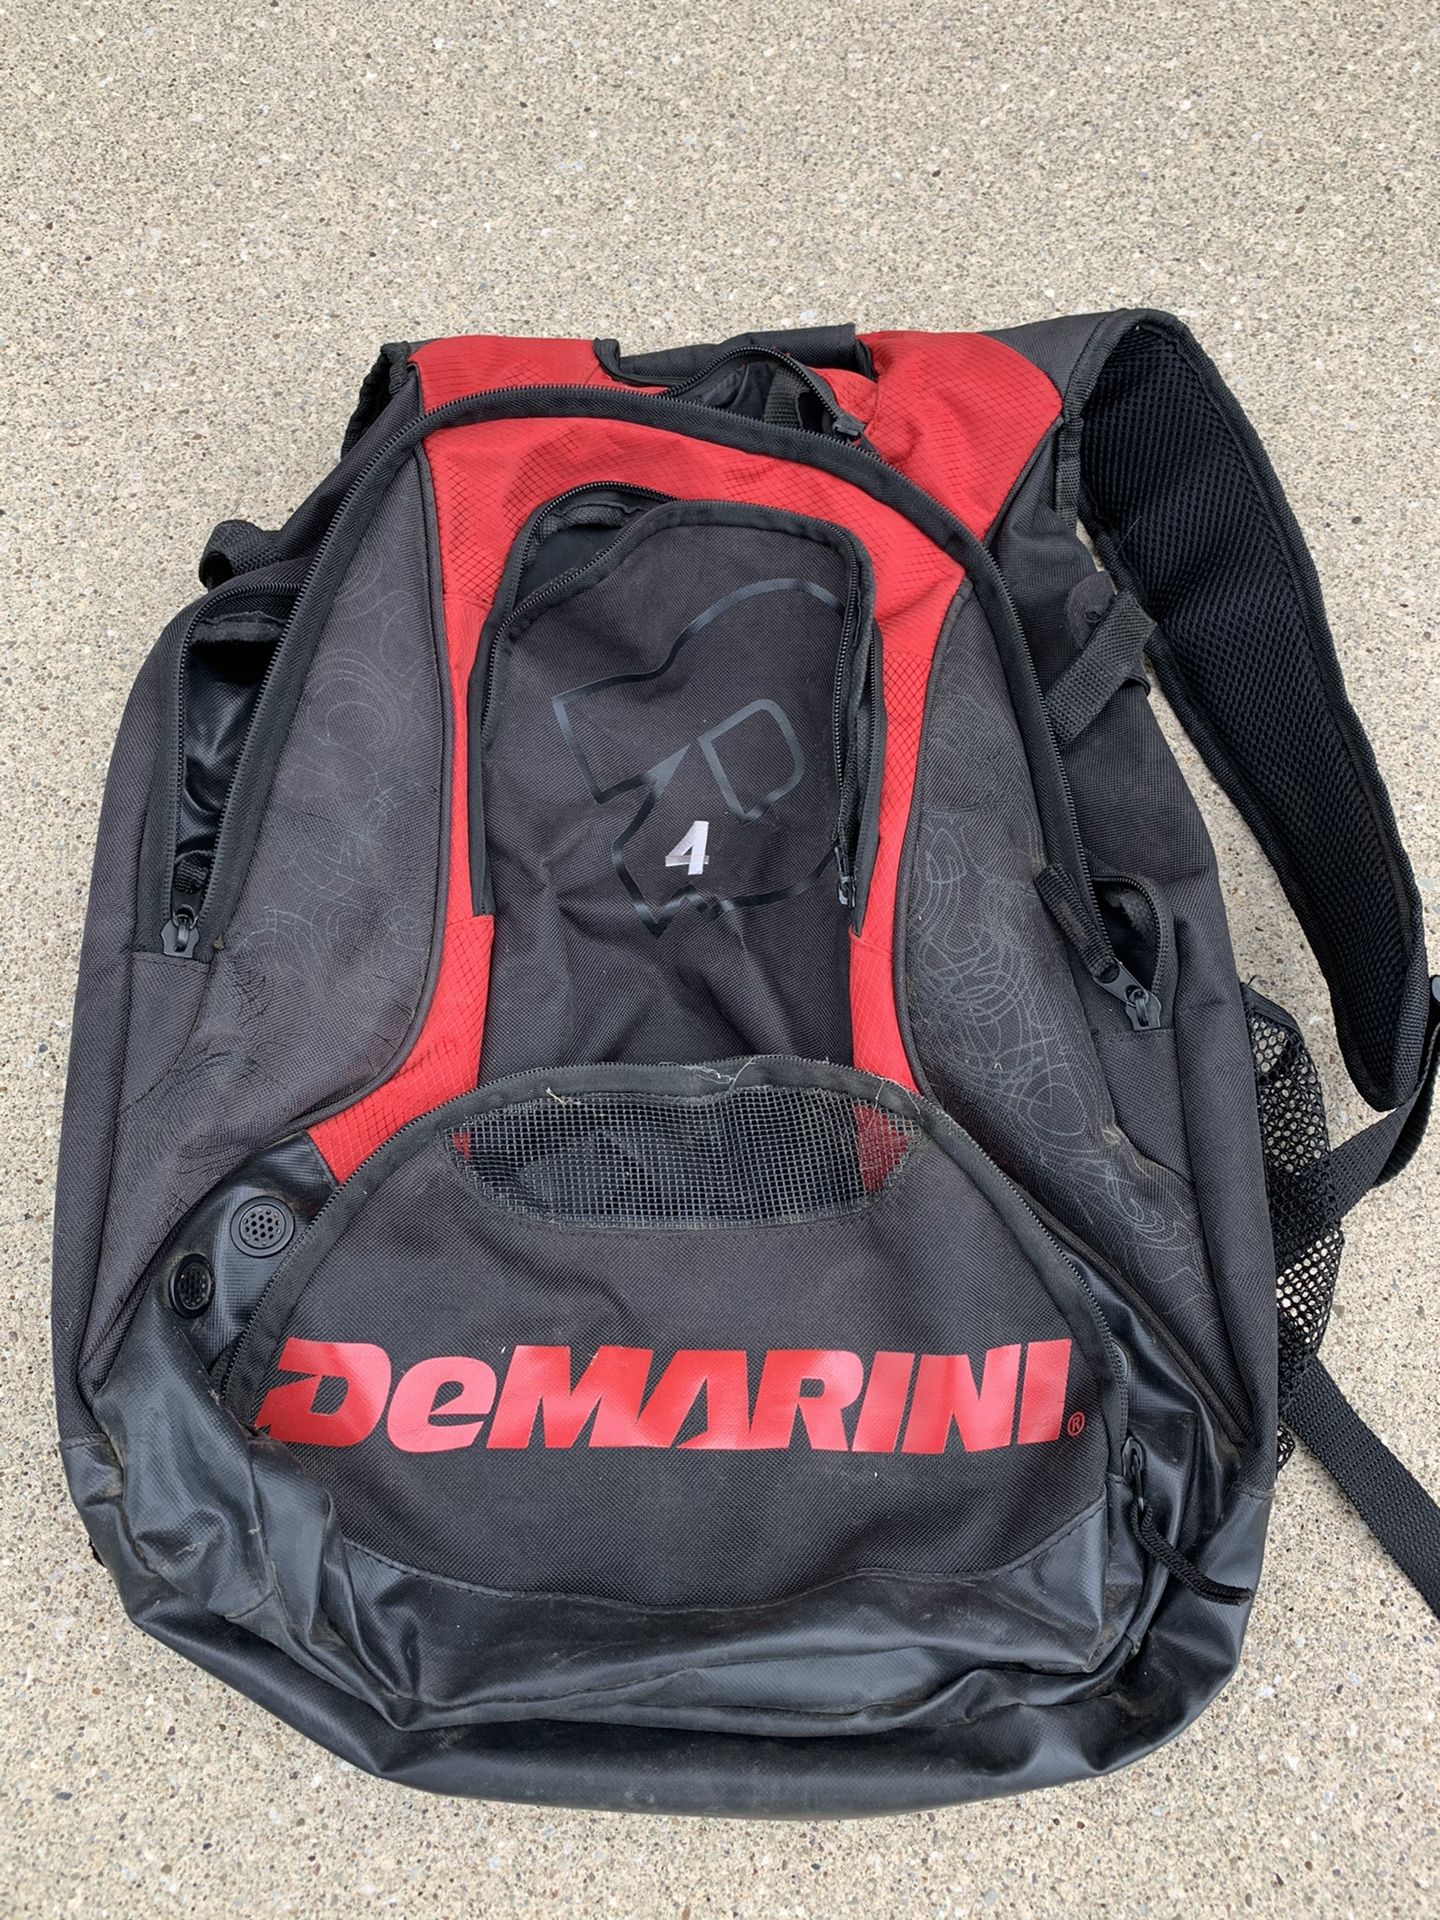 Bat bag - demarini (backpack style)